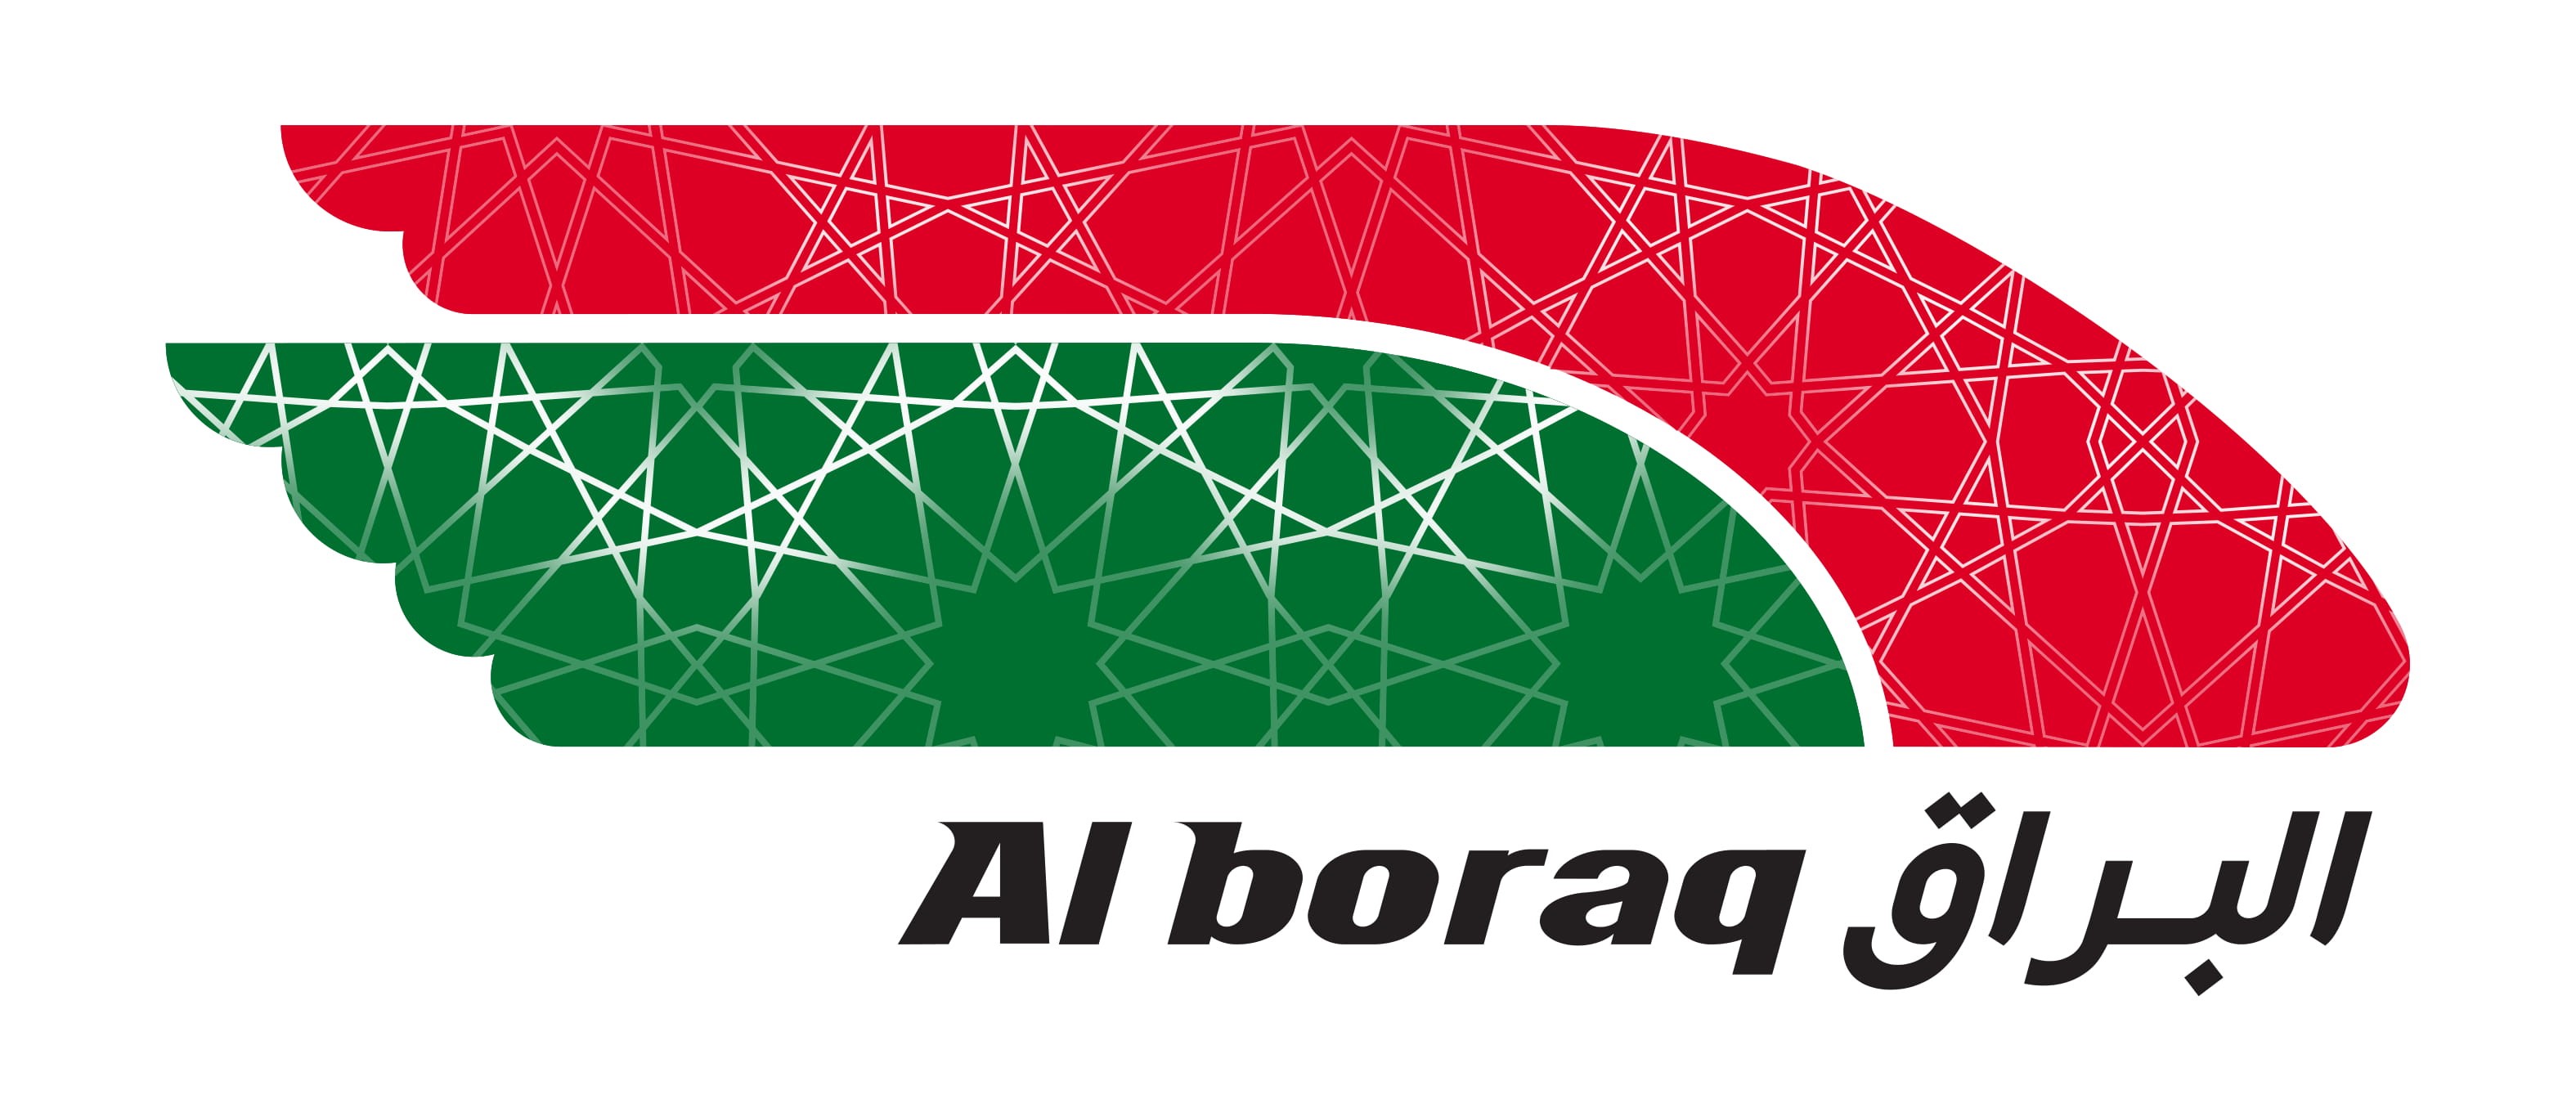 Guide du voyageur - Train à grande vitesse marocain 'Al Boraq'